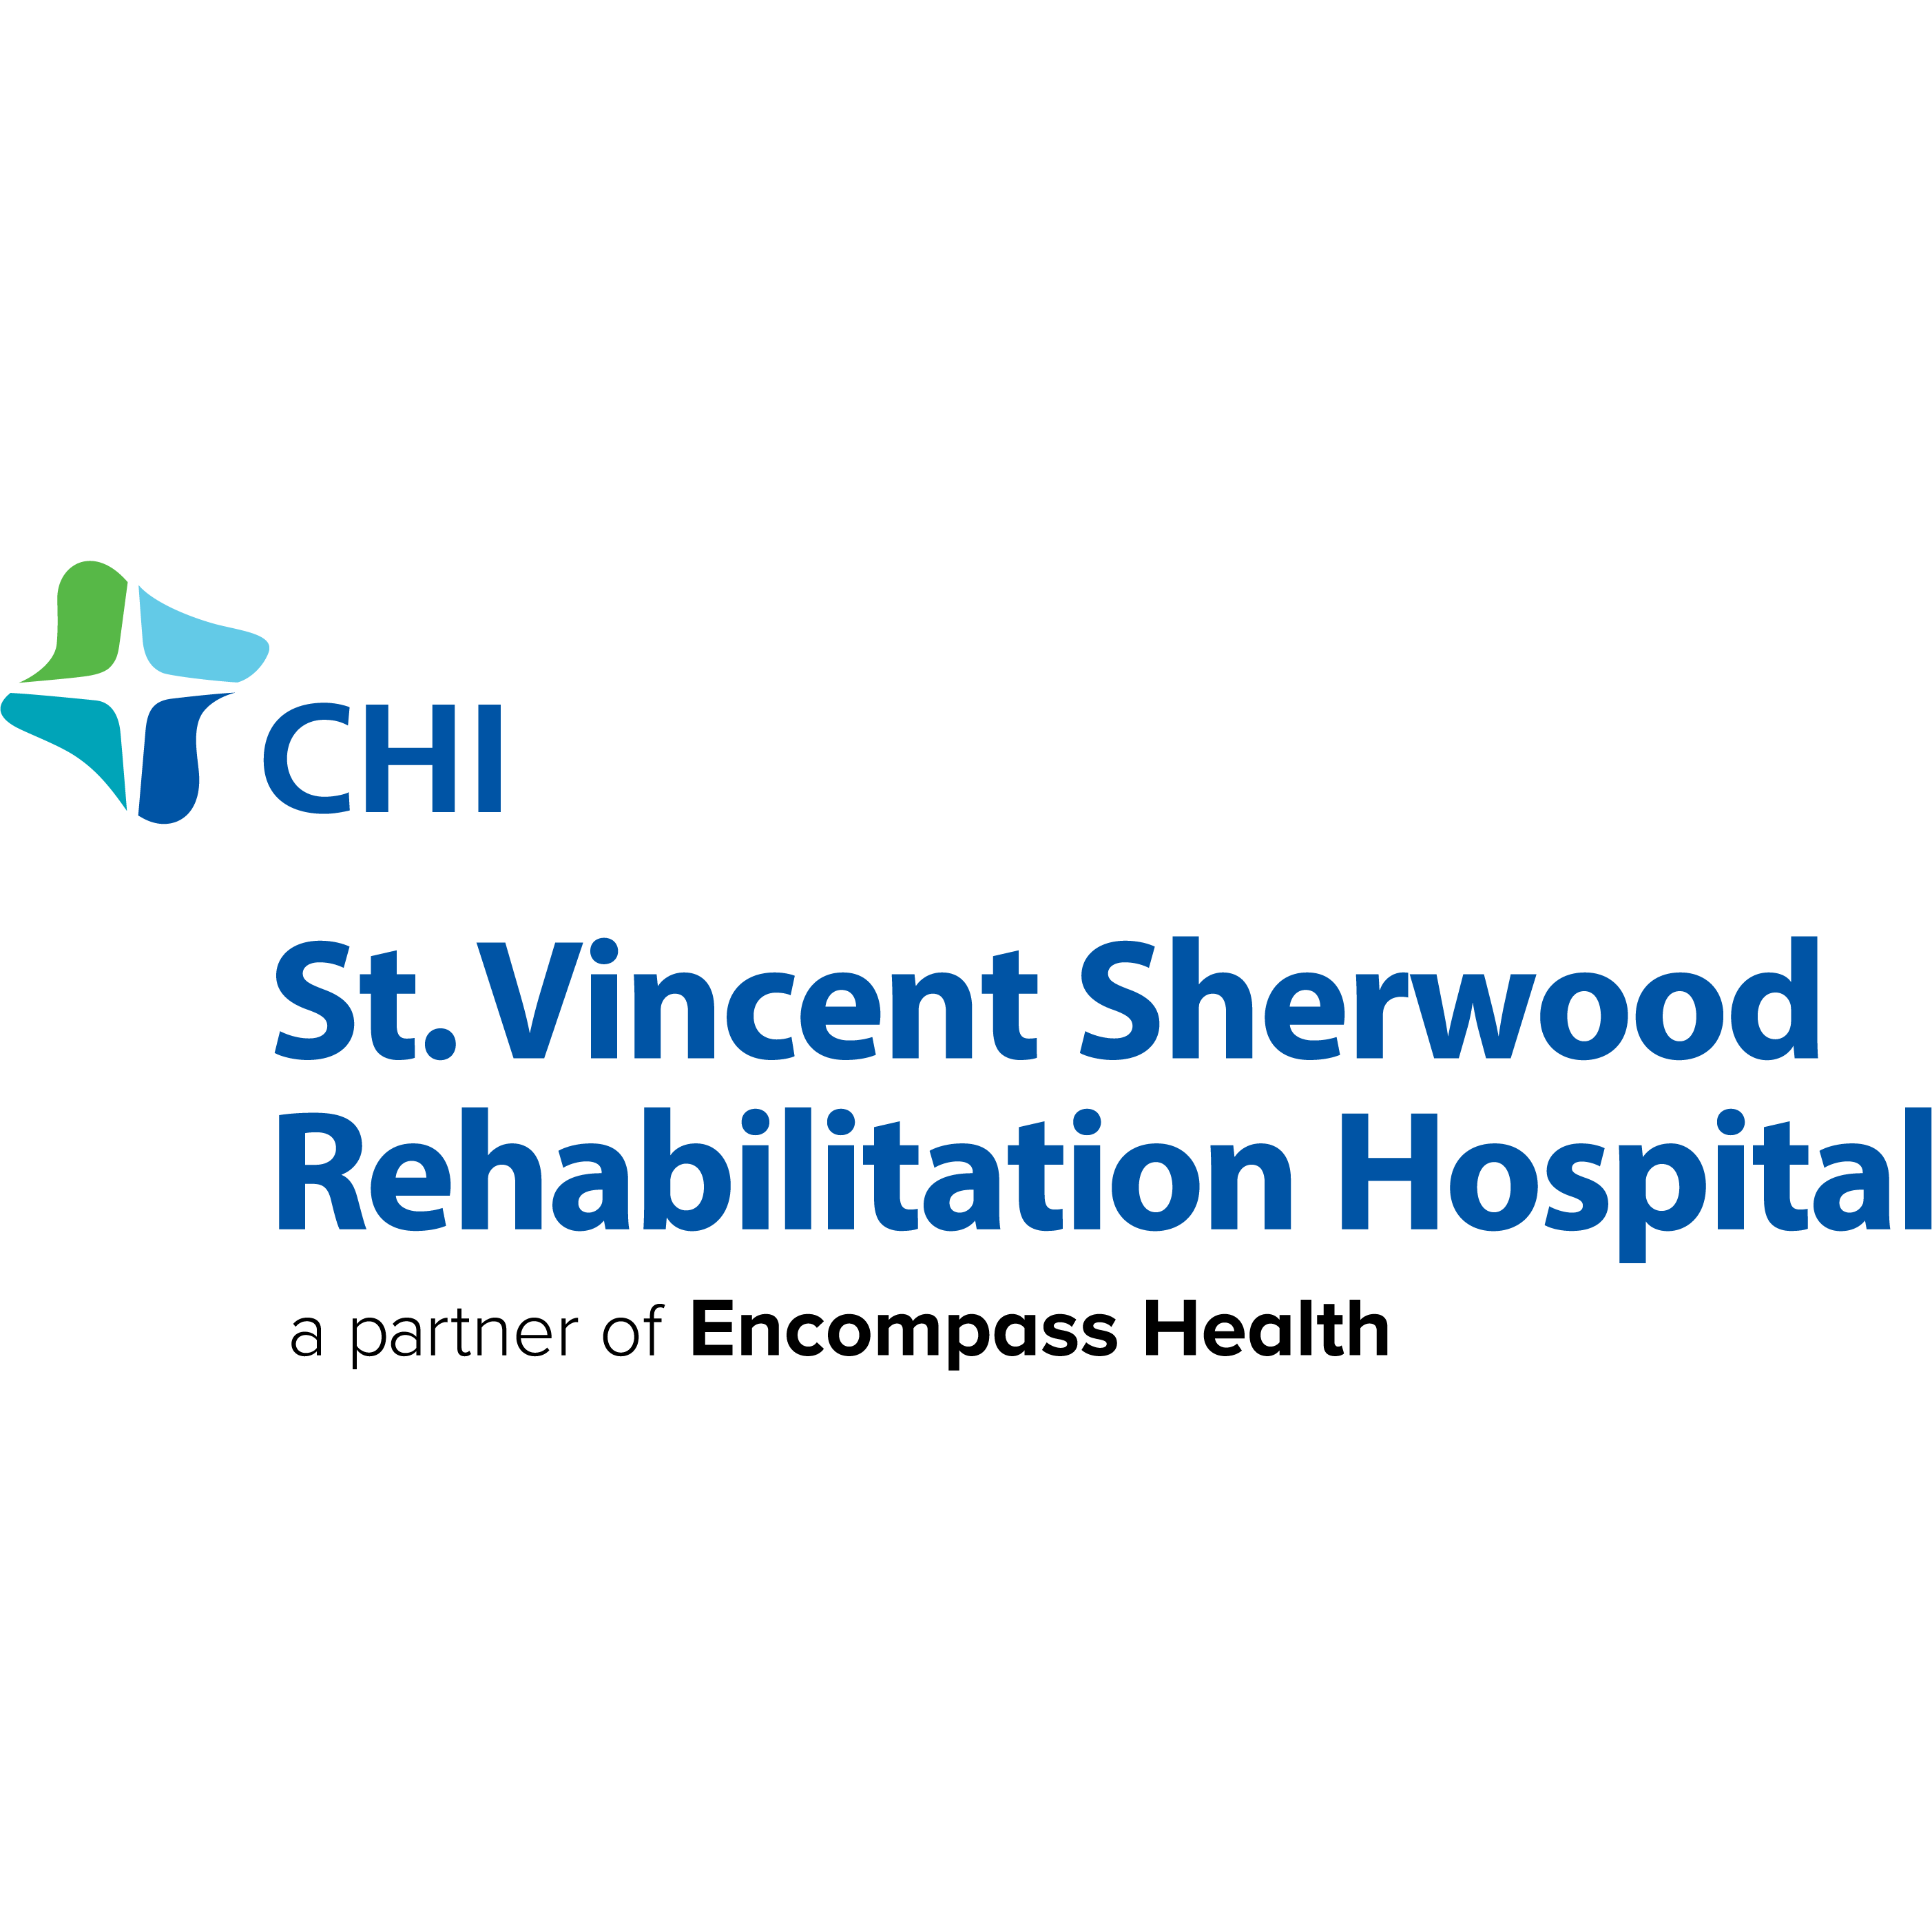 CHI St. Vincent Sherwood Rehabilitation Hospital - a partner of Encompass Health - Sherwood, AR 72120 - (501)834-1800 | ShowMeLocal.com